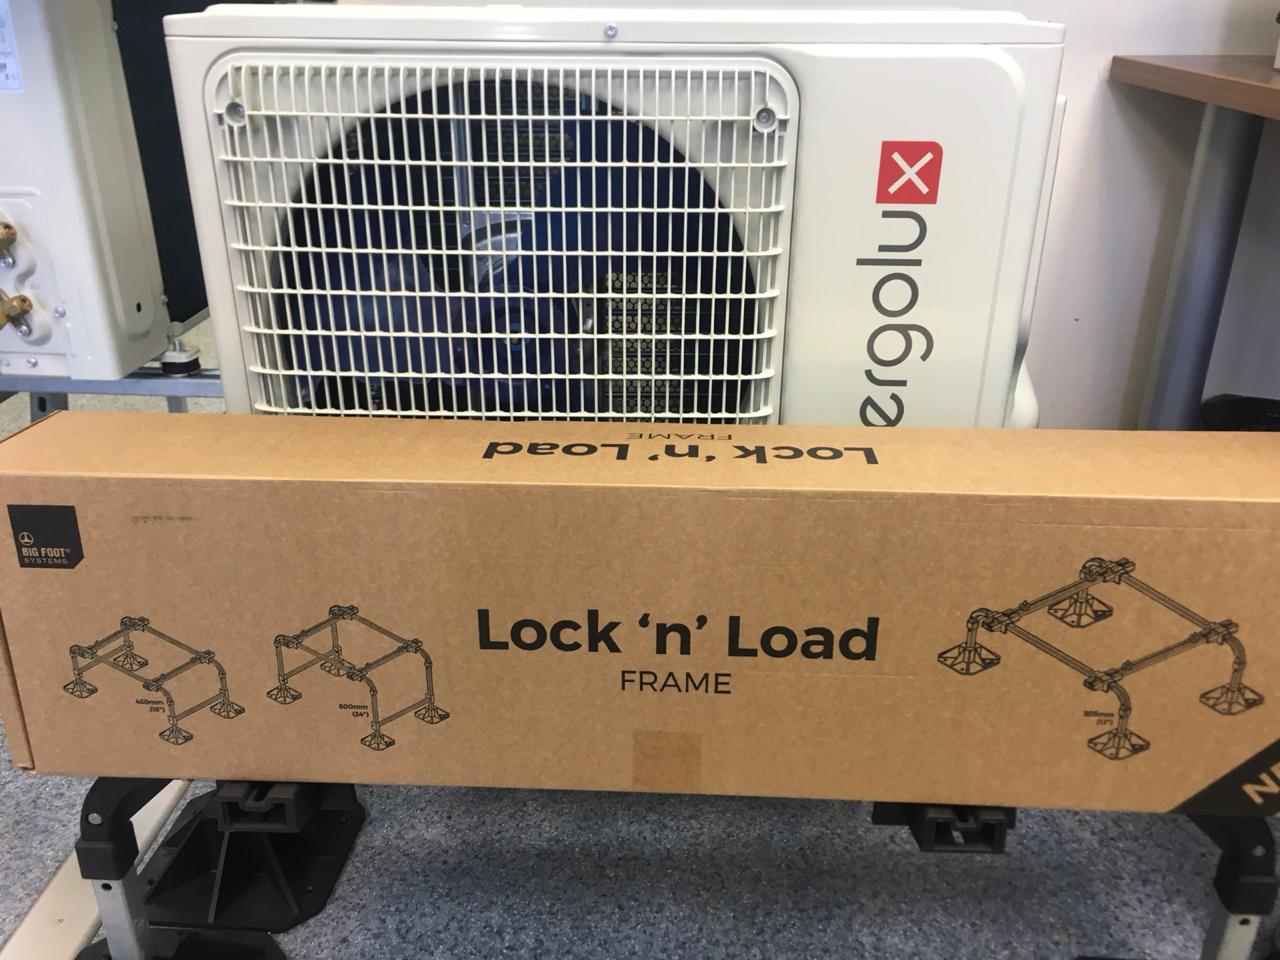 Lock ‘n’ Load